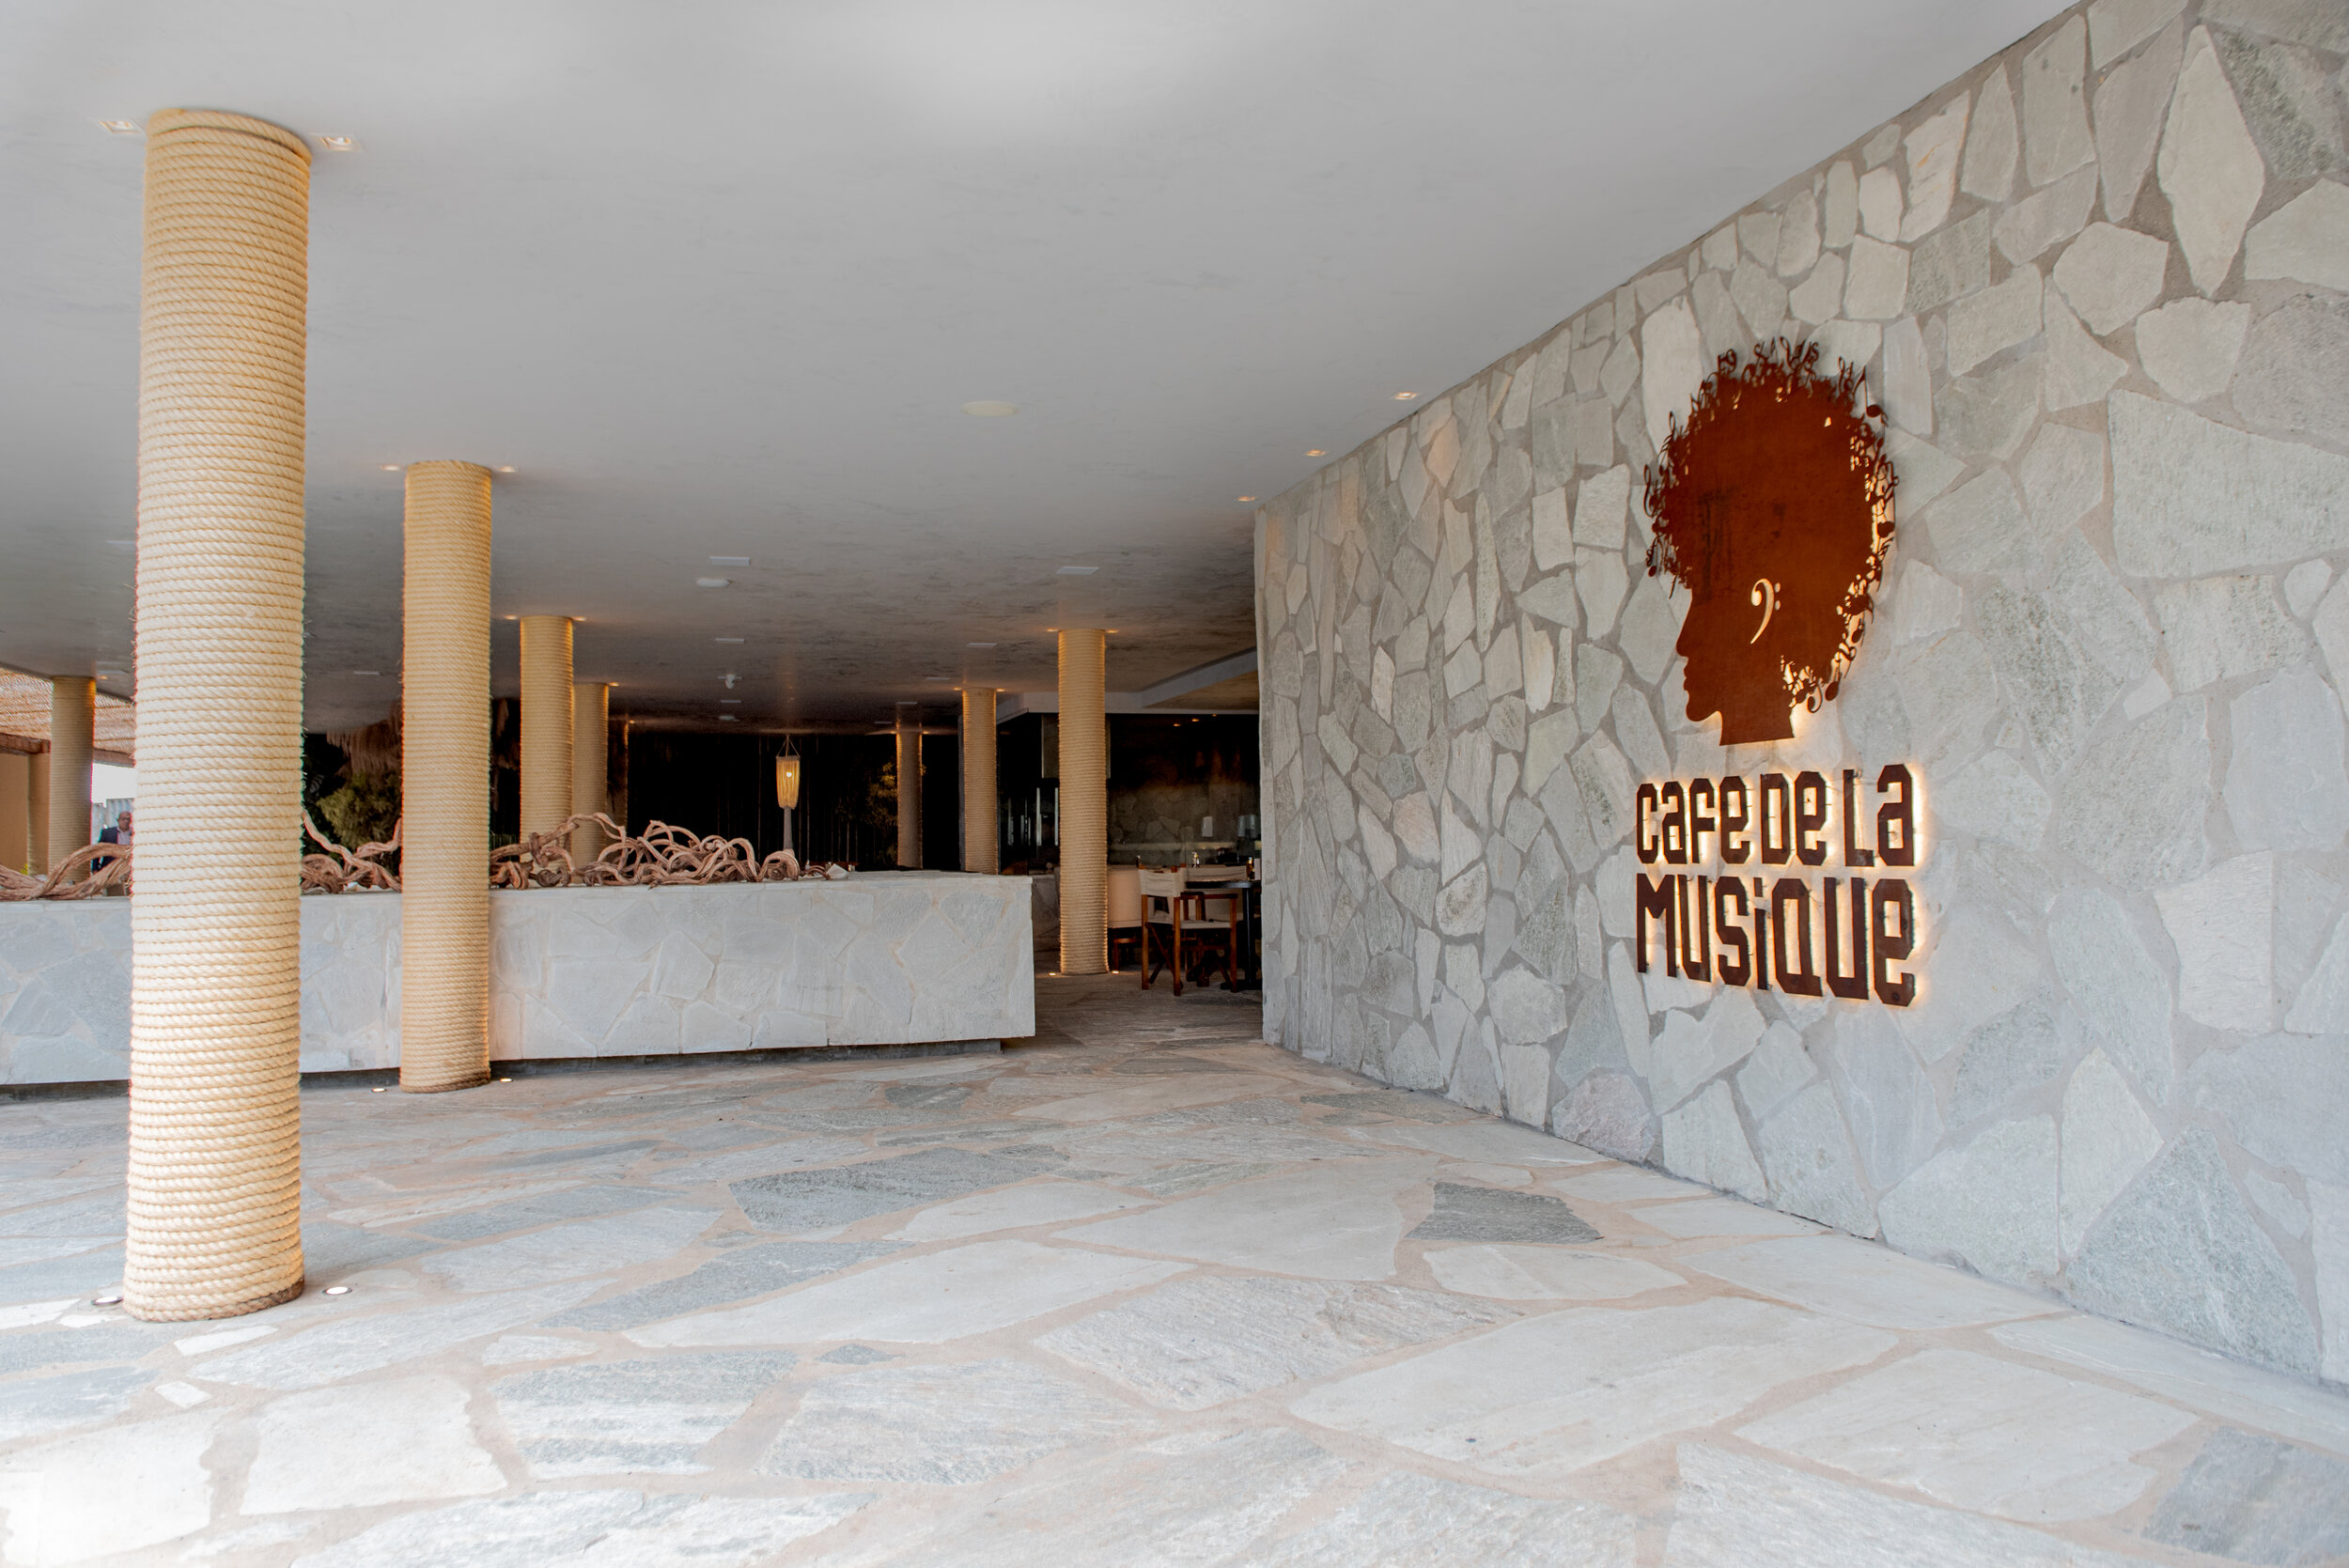 Sensorial Galeria Café & Piano - Asa Sul - Brasília